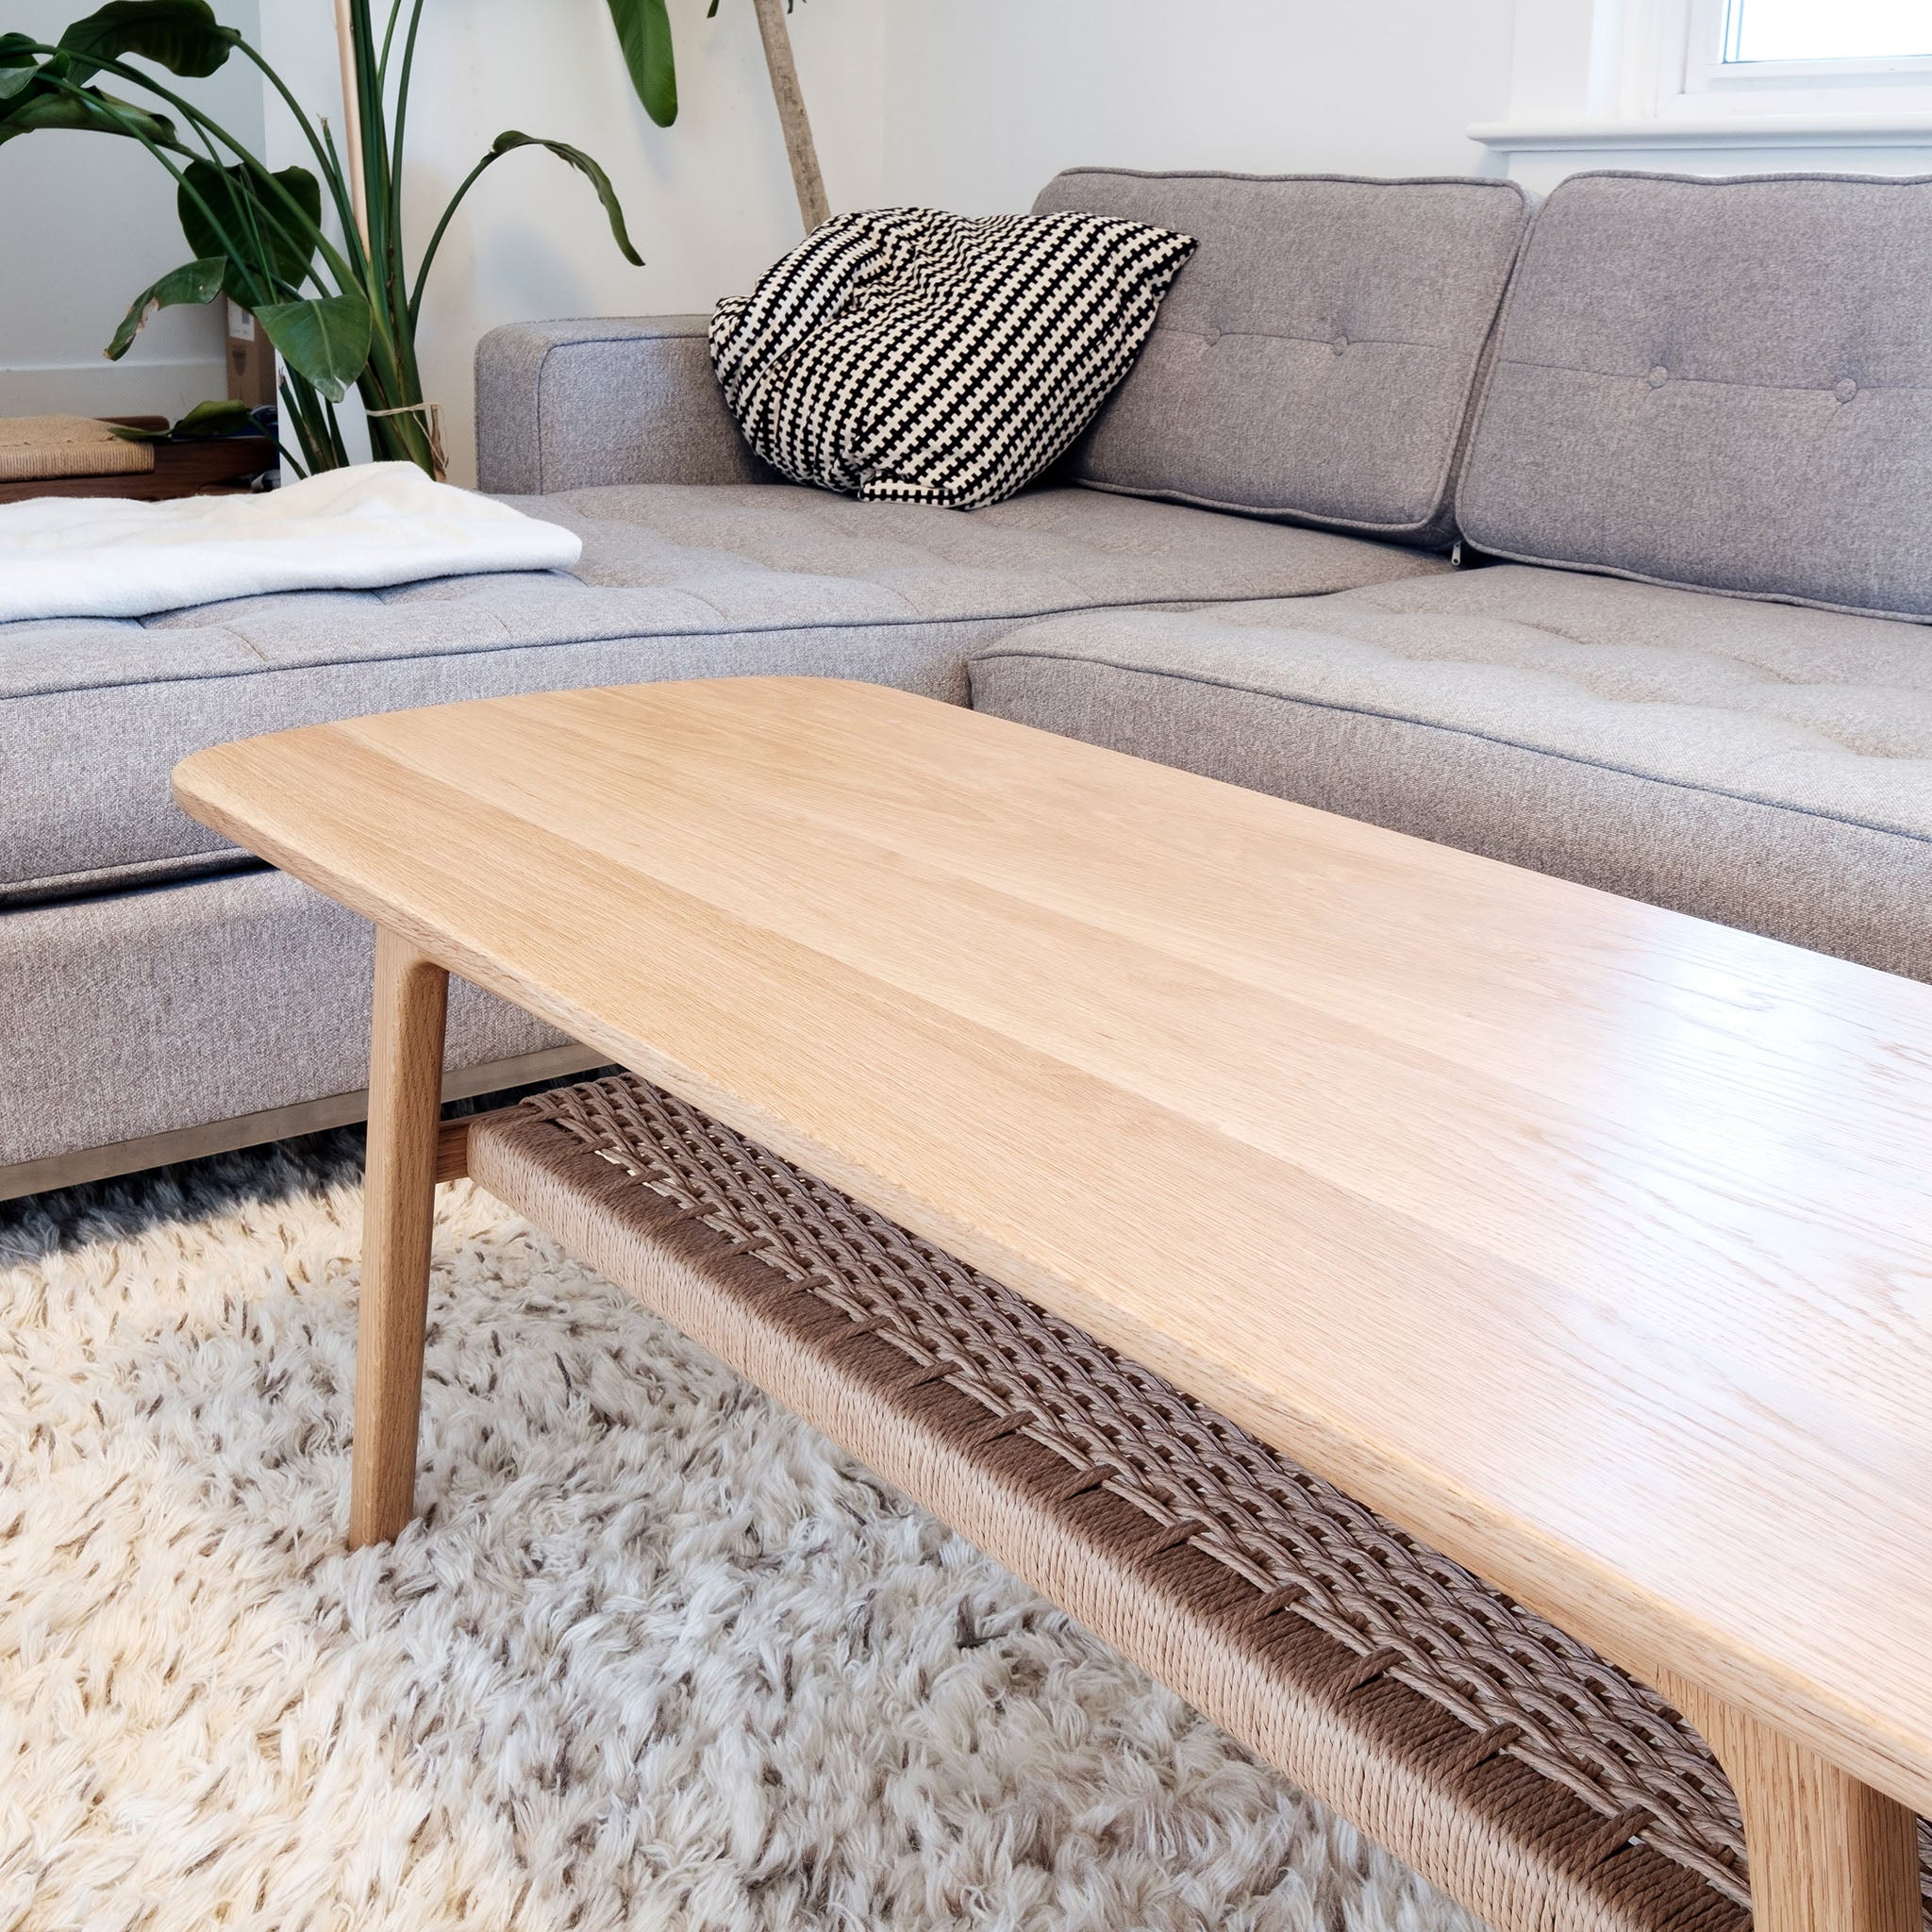 Mid century white oak coffee table, danish cord lower shelf, splayed legs, living room couch, rift sawn